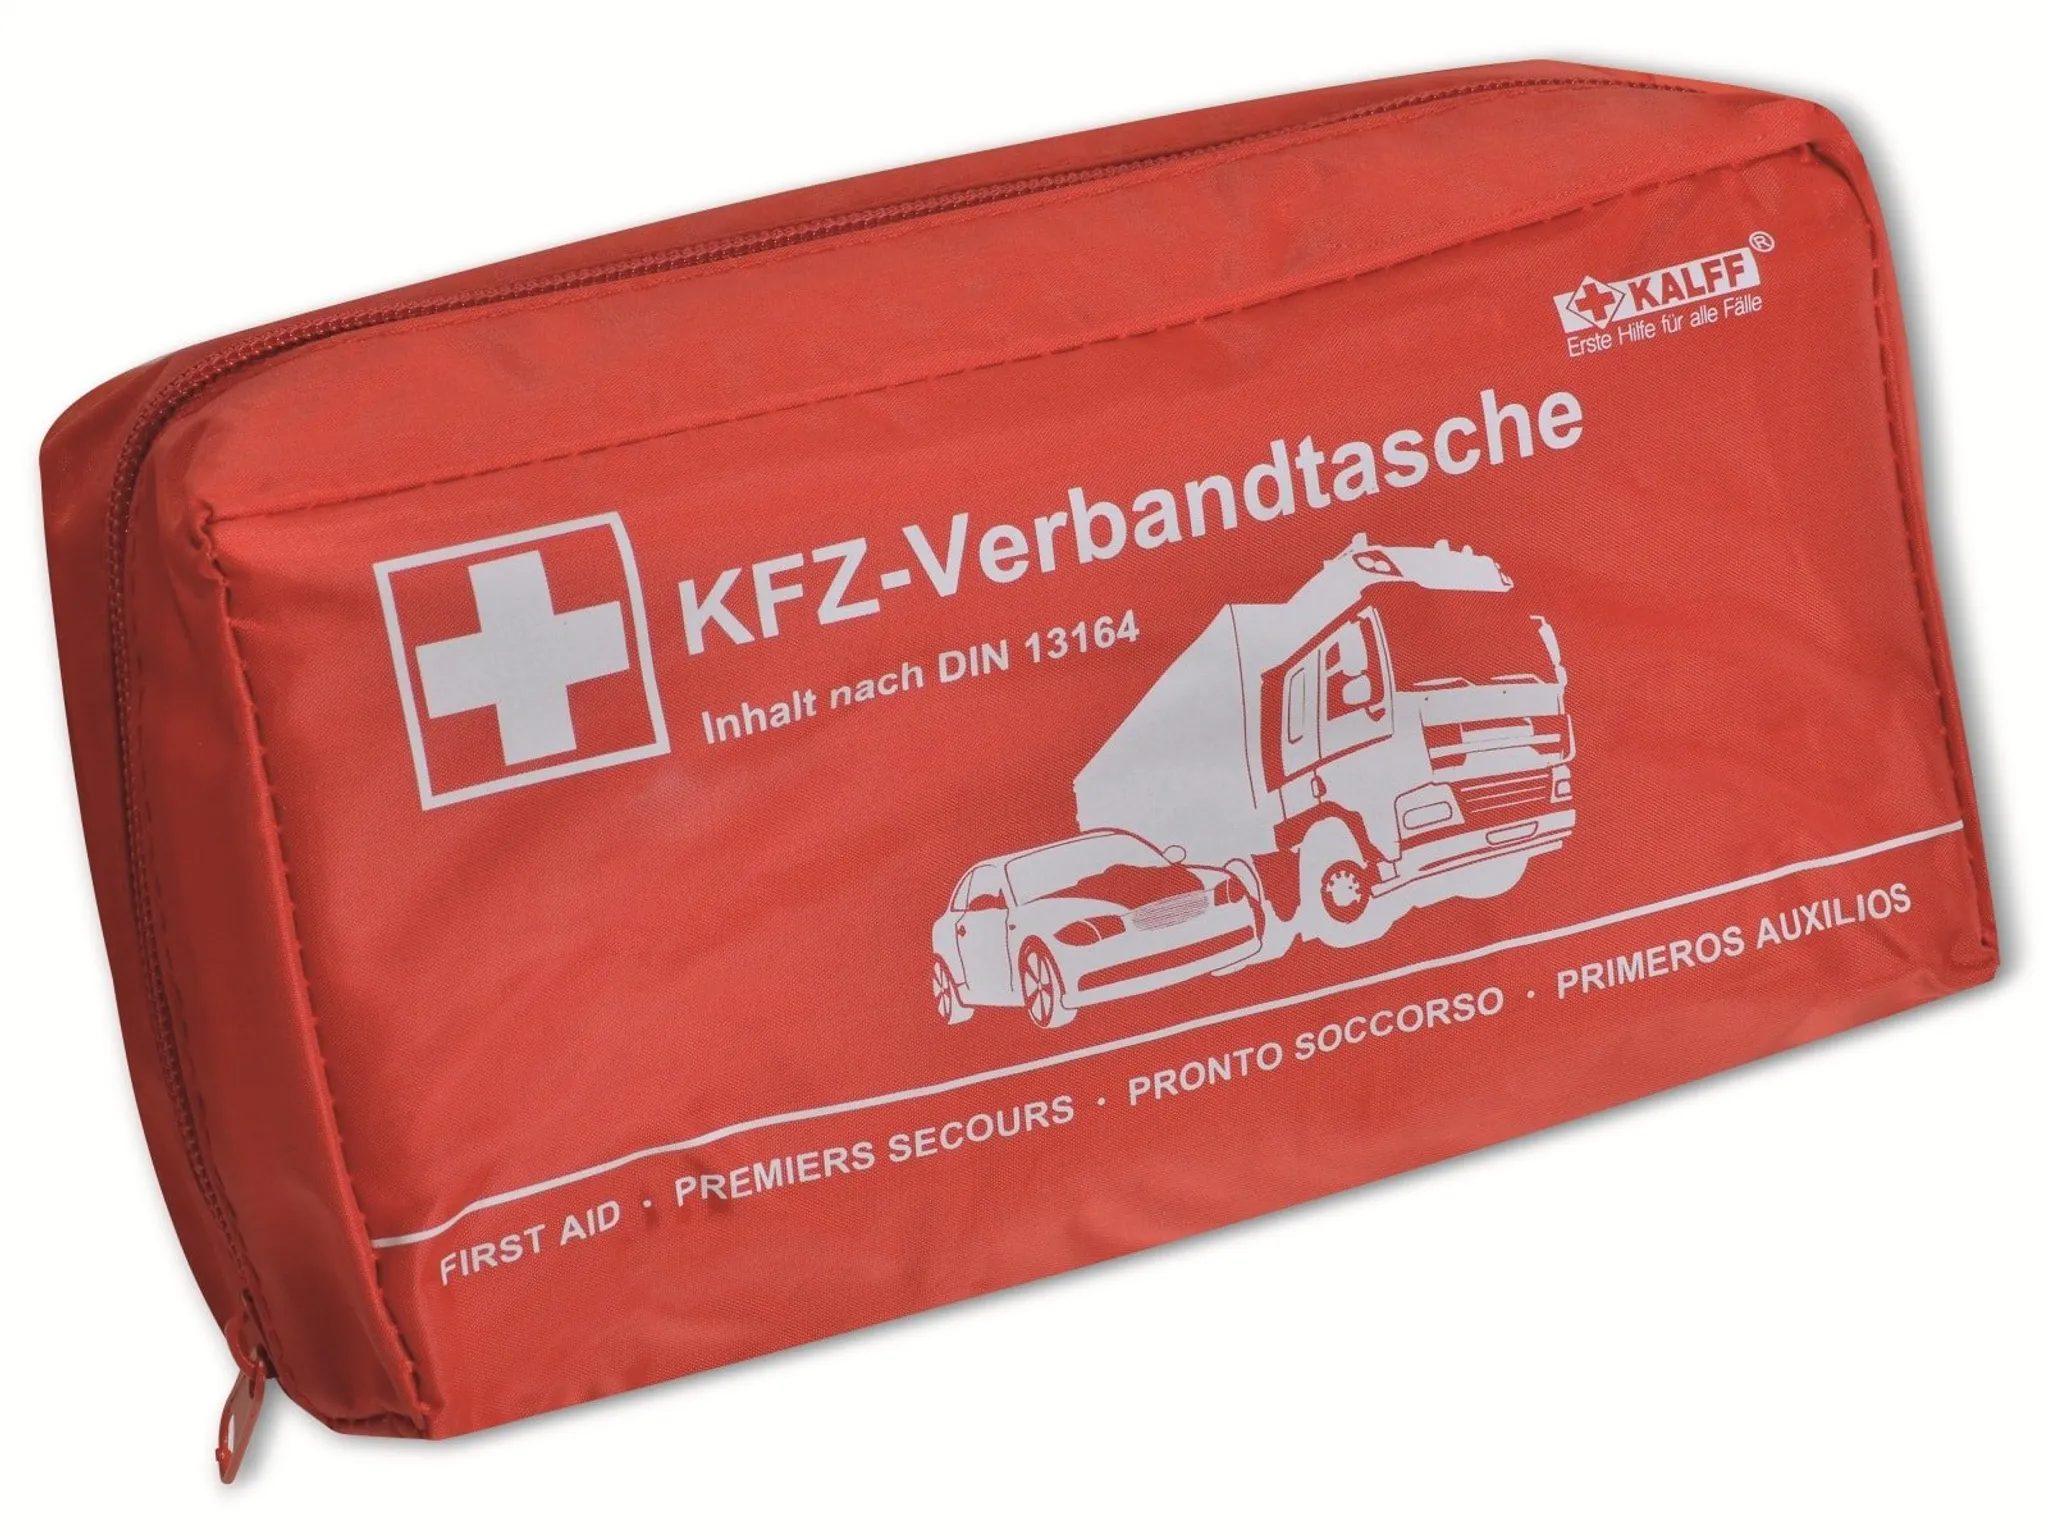 KALFF KFZ Verbandtasche Kompakt Inhalt DIN